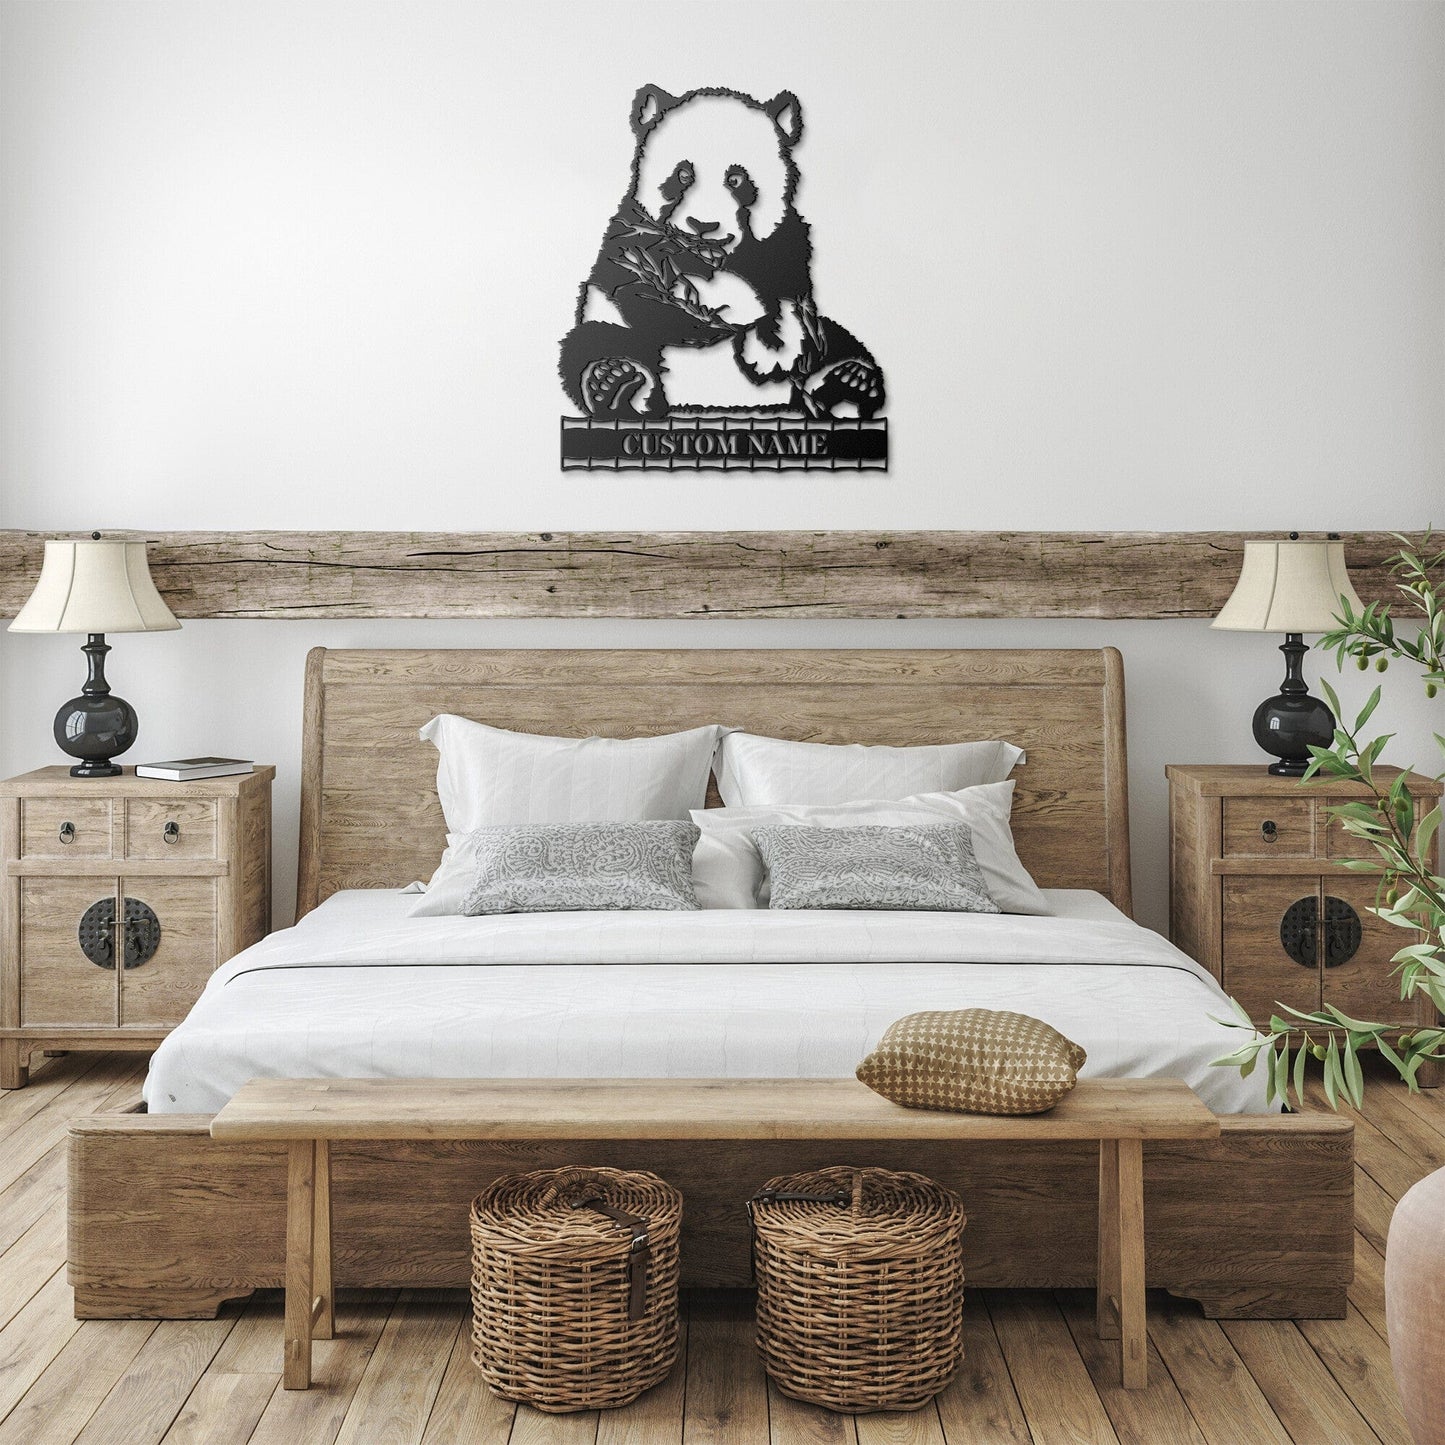 Panda Bear Personalized Metal Art Wall Sign